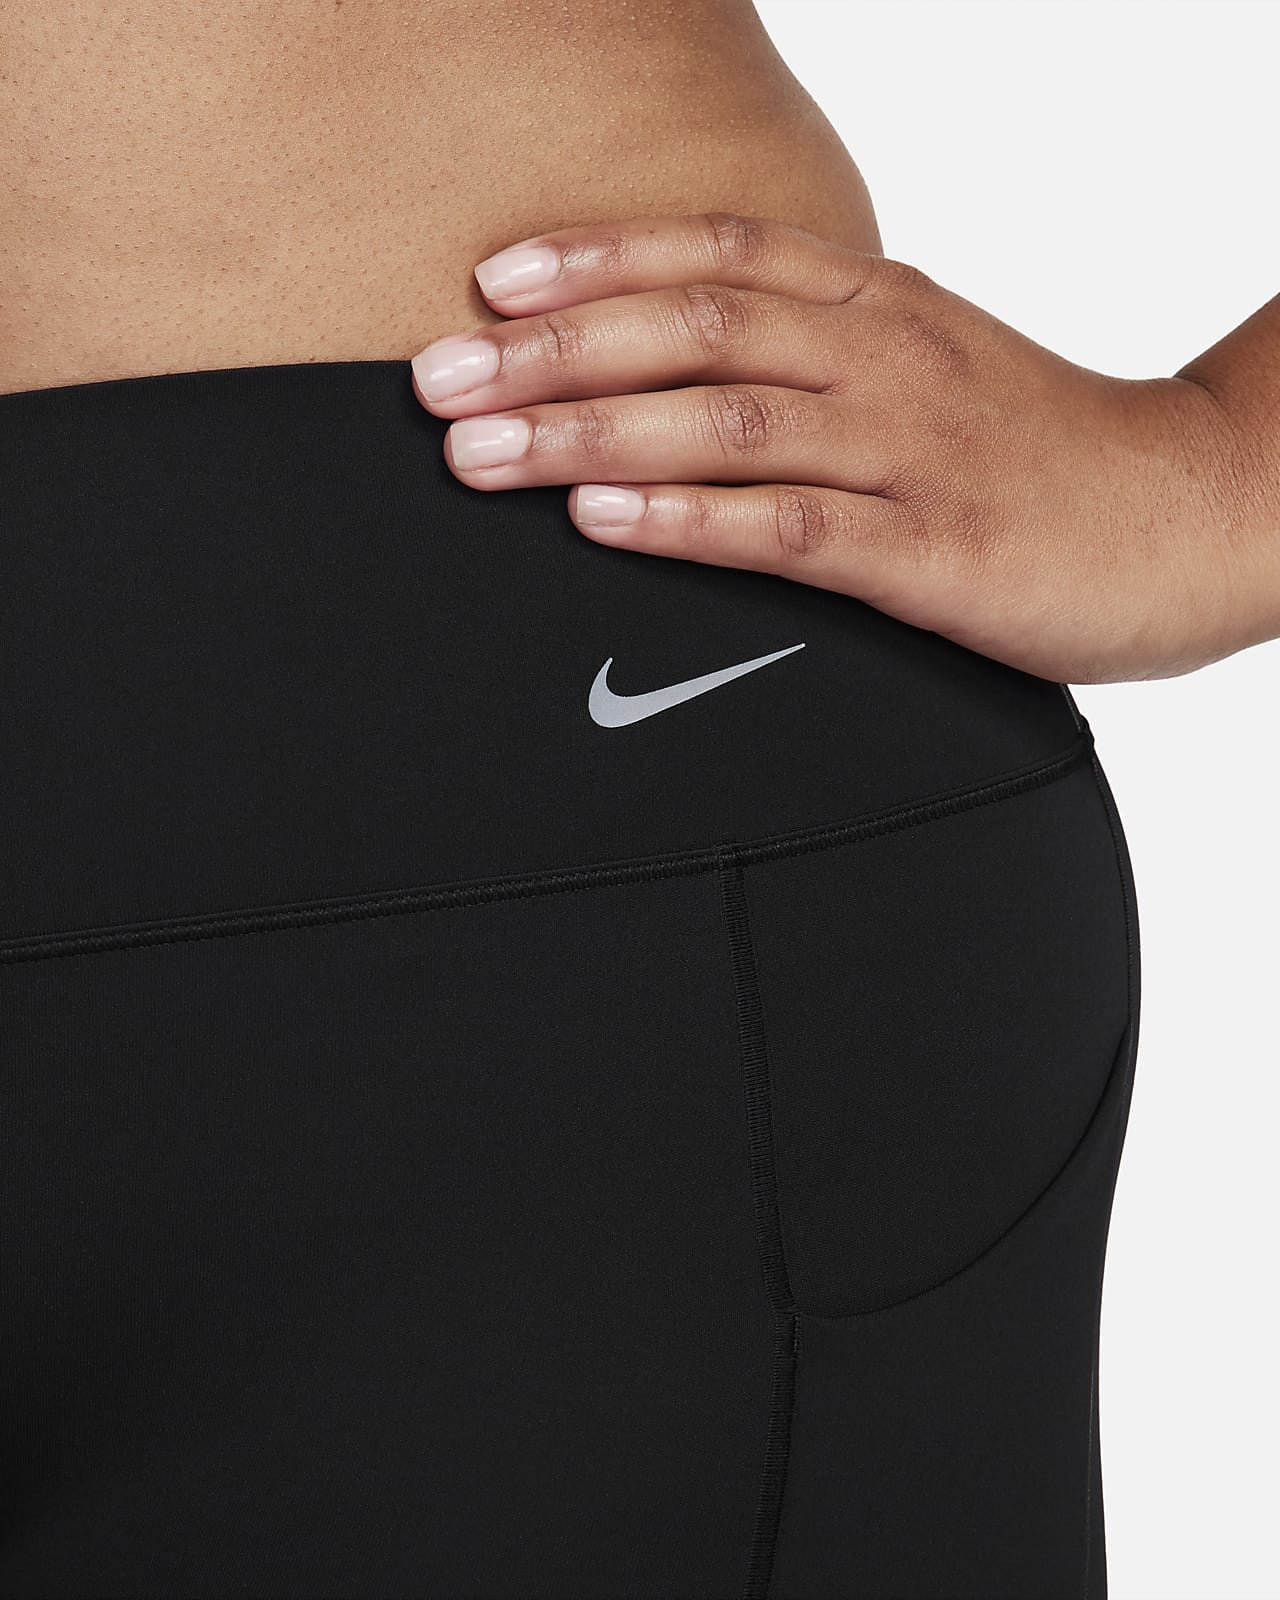  Nike Women's AIR Ribbed 7/8 Leggings CJ3077-432 Size